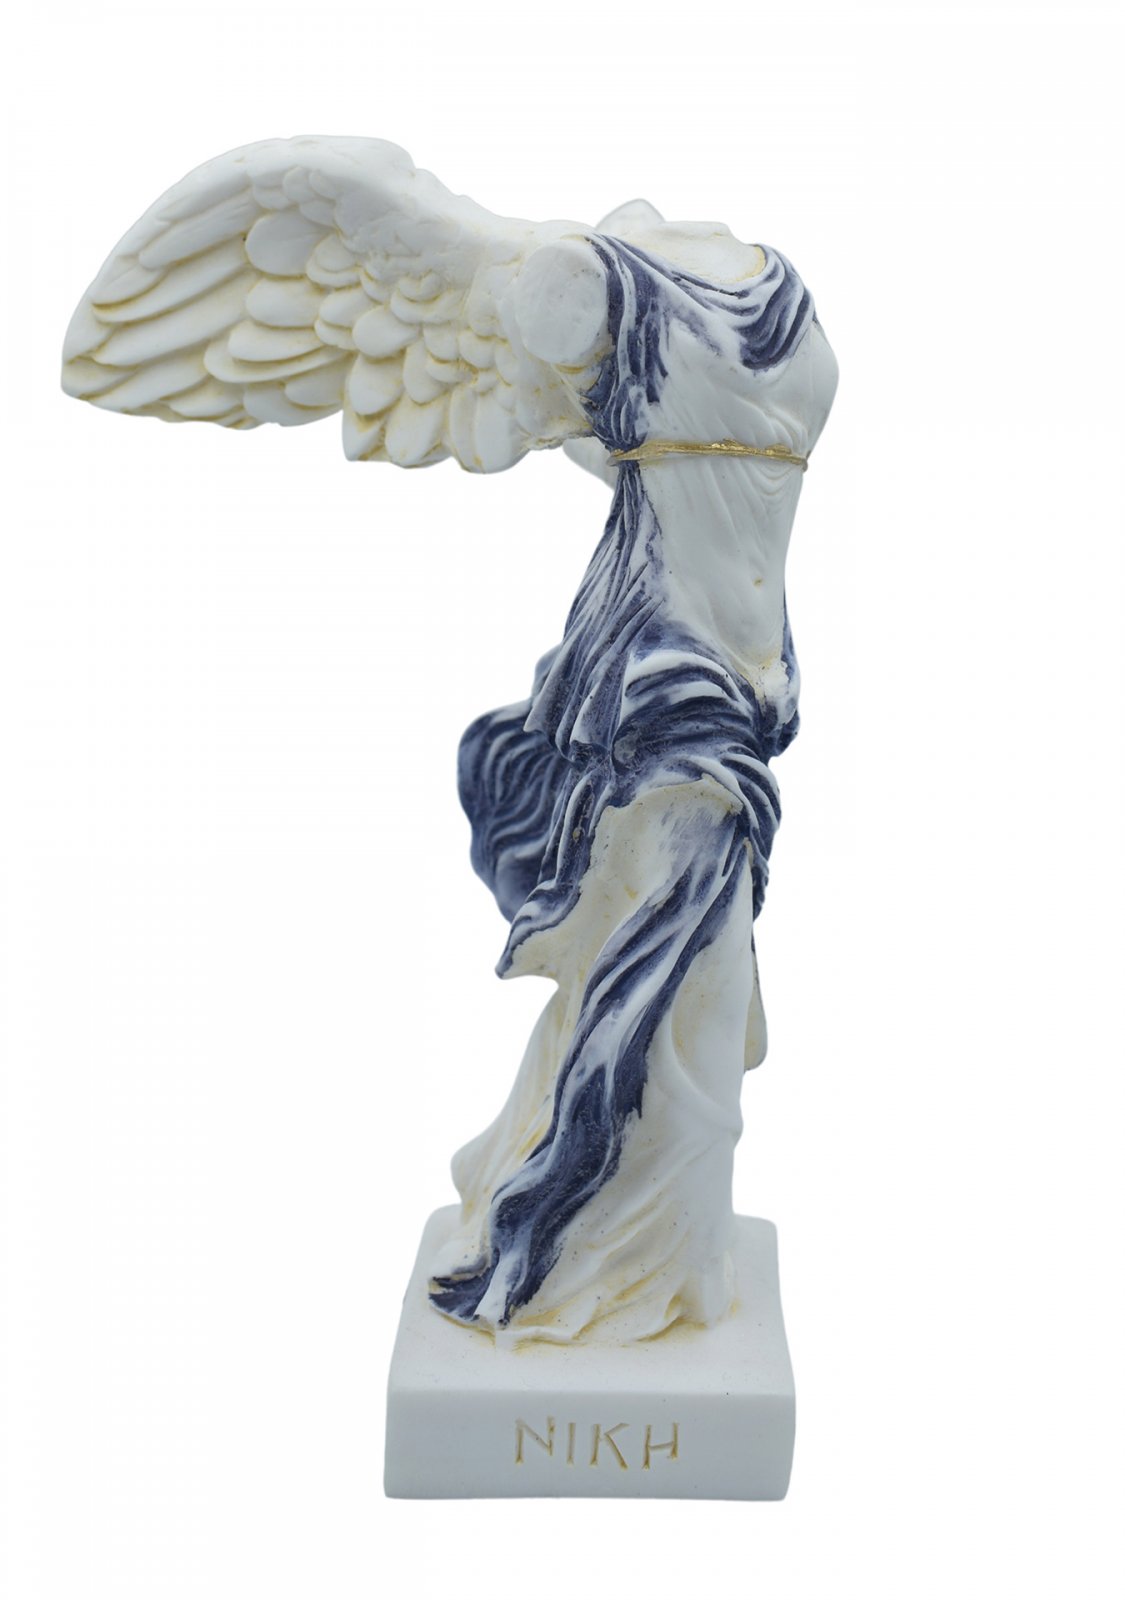 Nike of Samothrace greek alabaster statue with purple color and golden details